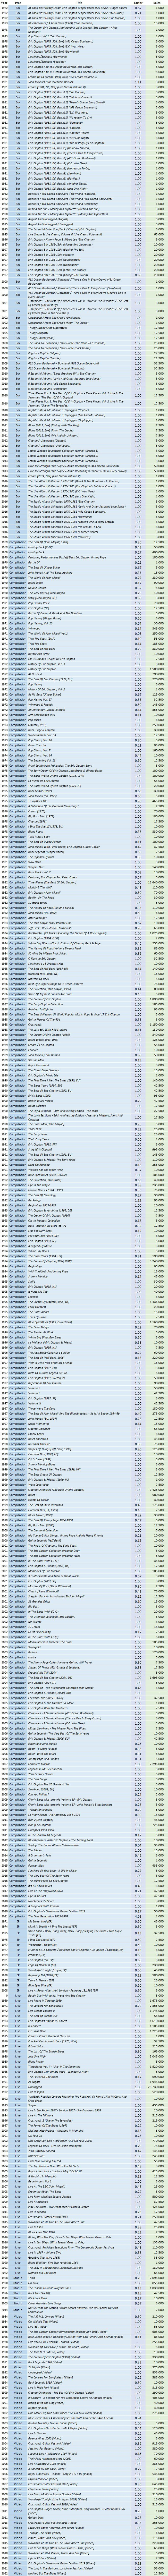 CSPC Eric Clapton compilation sales list